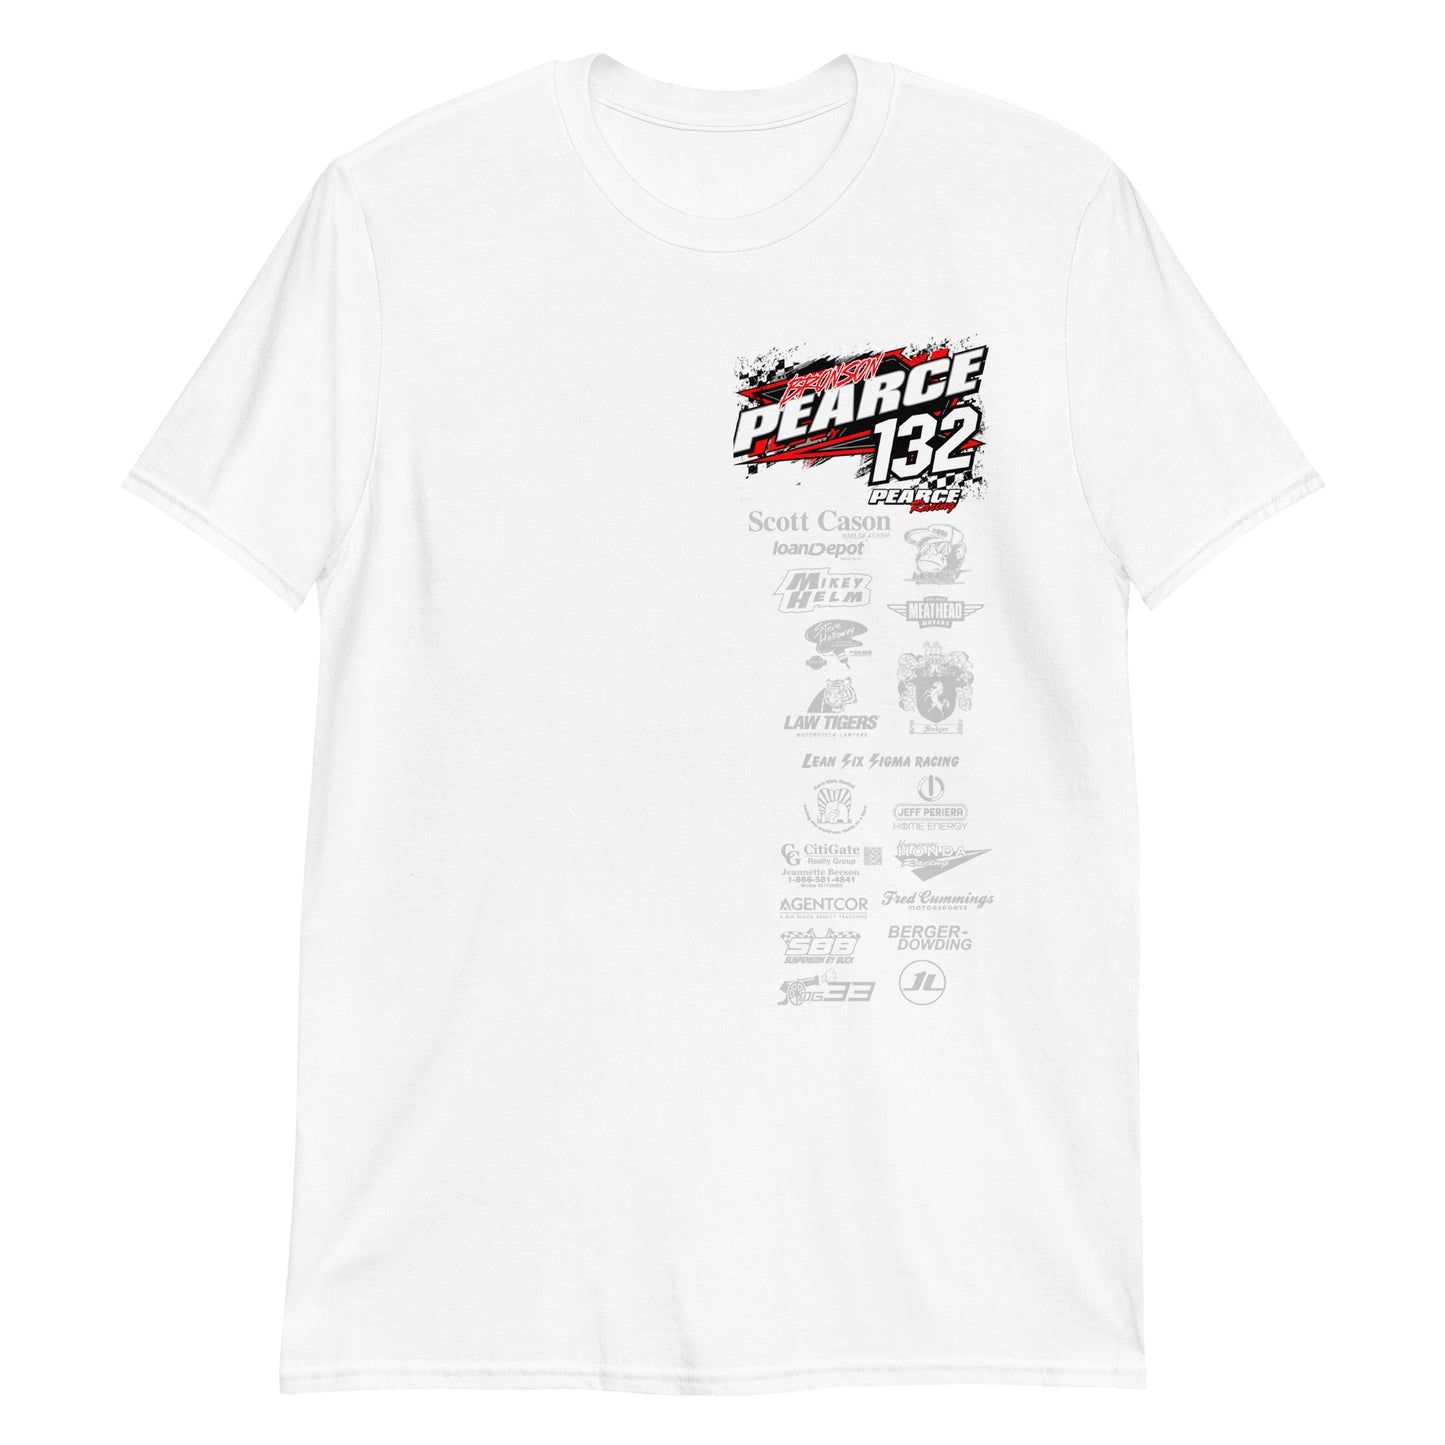 2023 Pearce Racing T-Shirt White Logo's